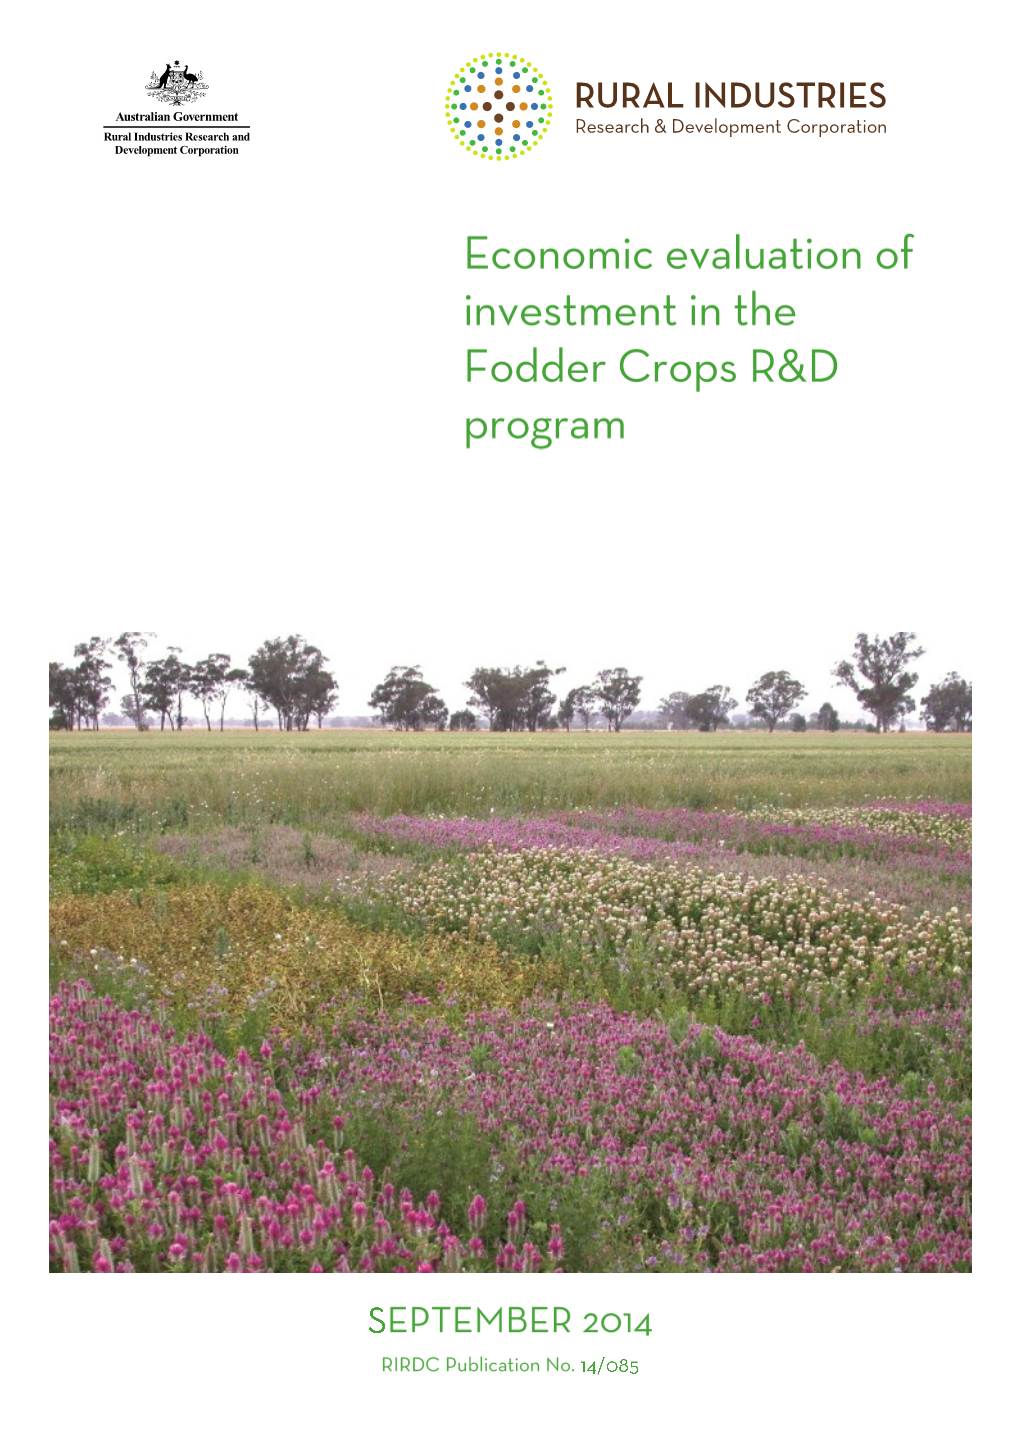 Economic Evaluation of Investment in the Fodder Crops R&D Program